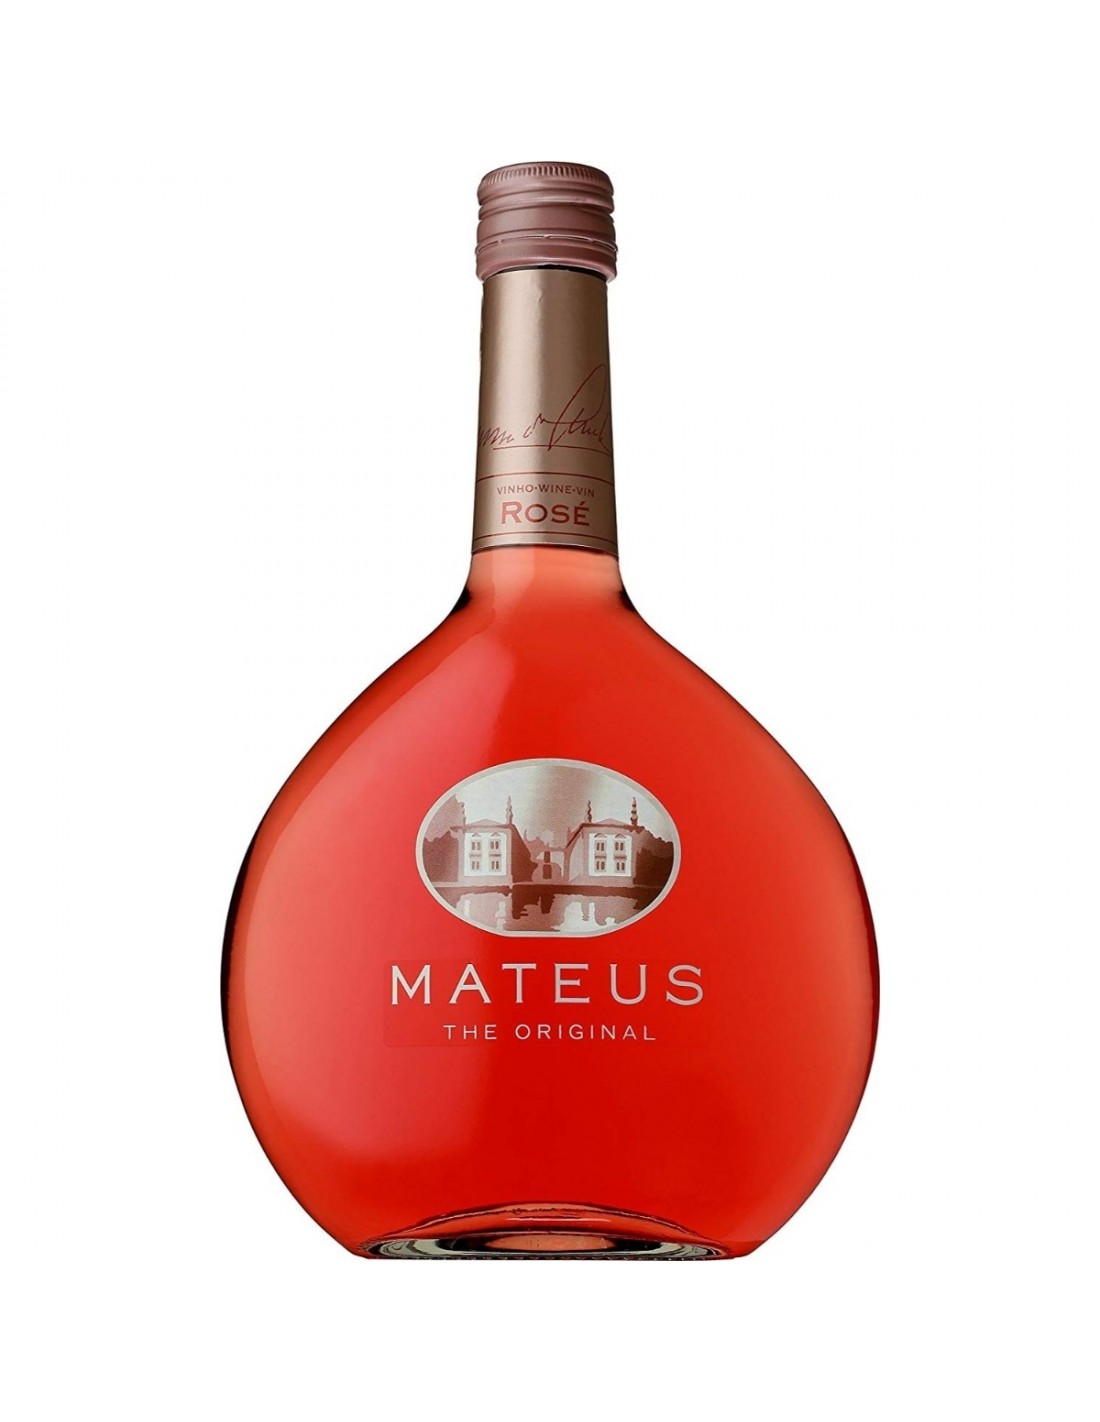 Vin roze demisec Mateus Douro, 0.75L, 11% alc., Portugalia alcooldiscount.ro